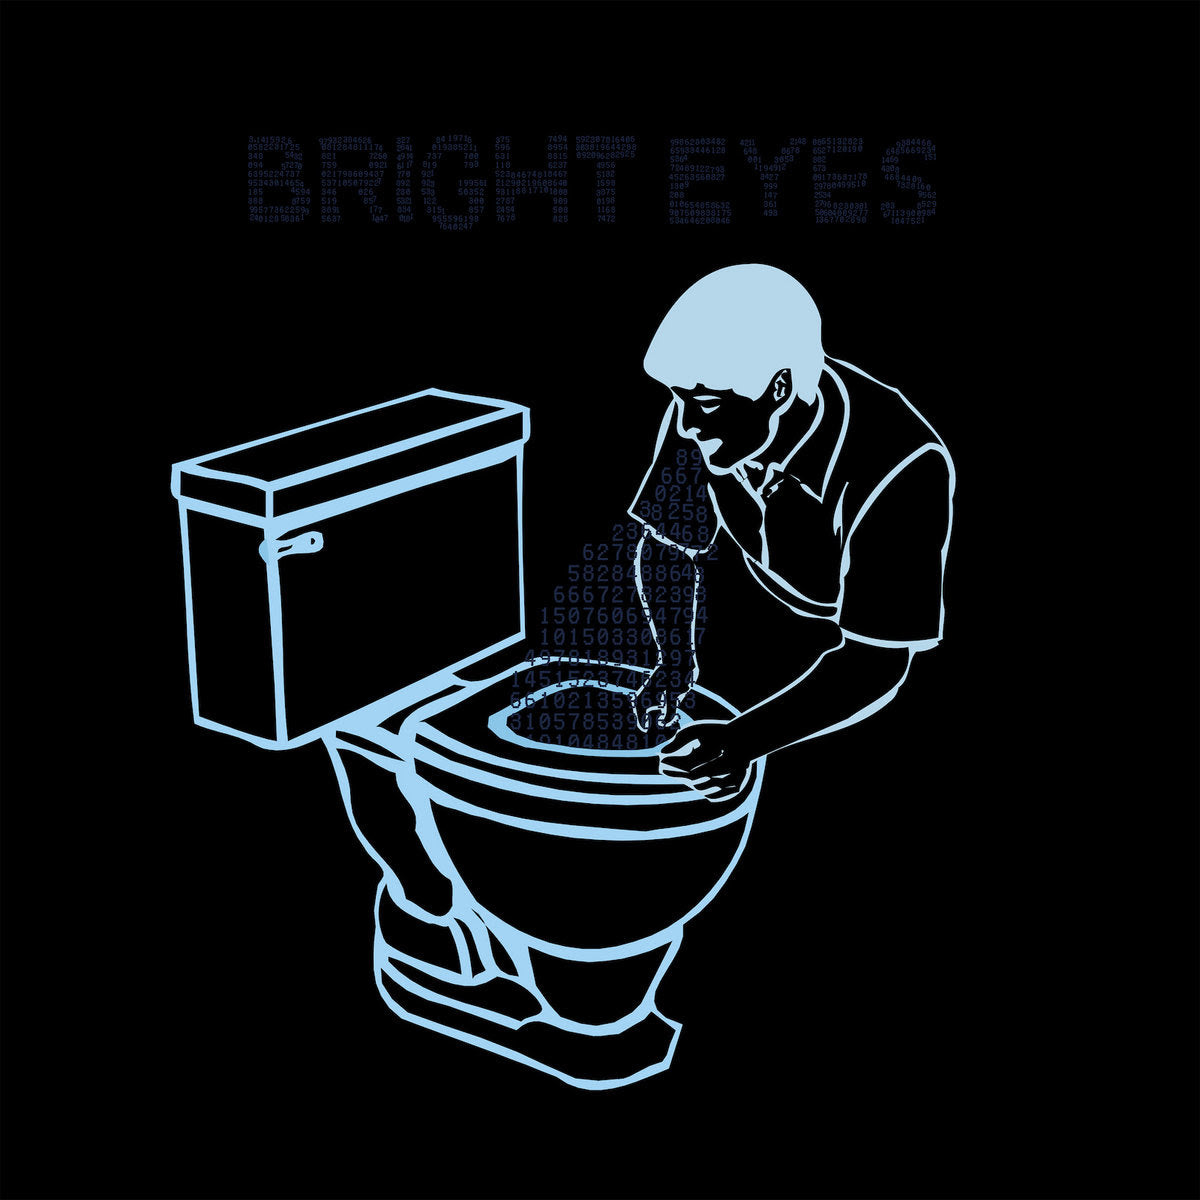 Bright Eyes - Digital Ash | Buy the Vinyl LP from Flying Nun Records